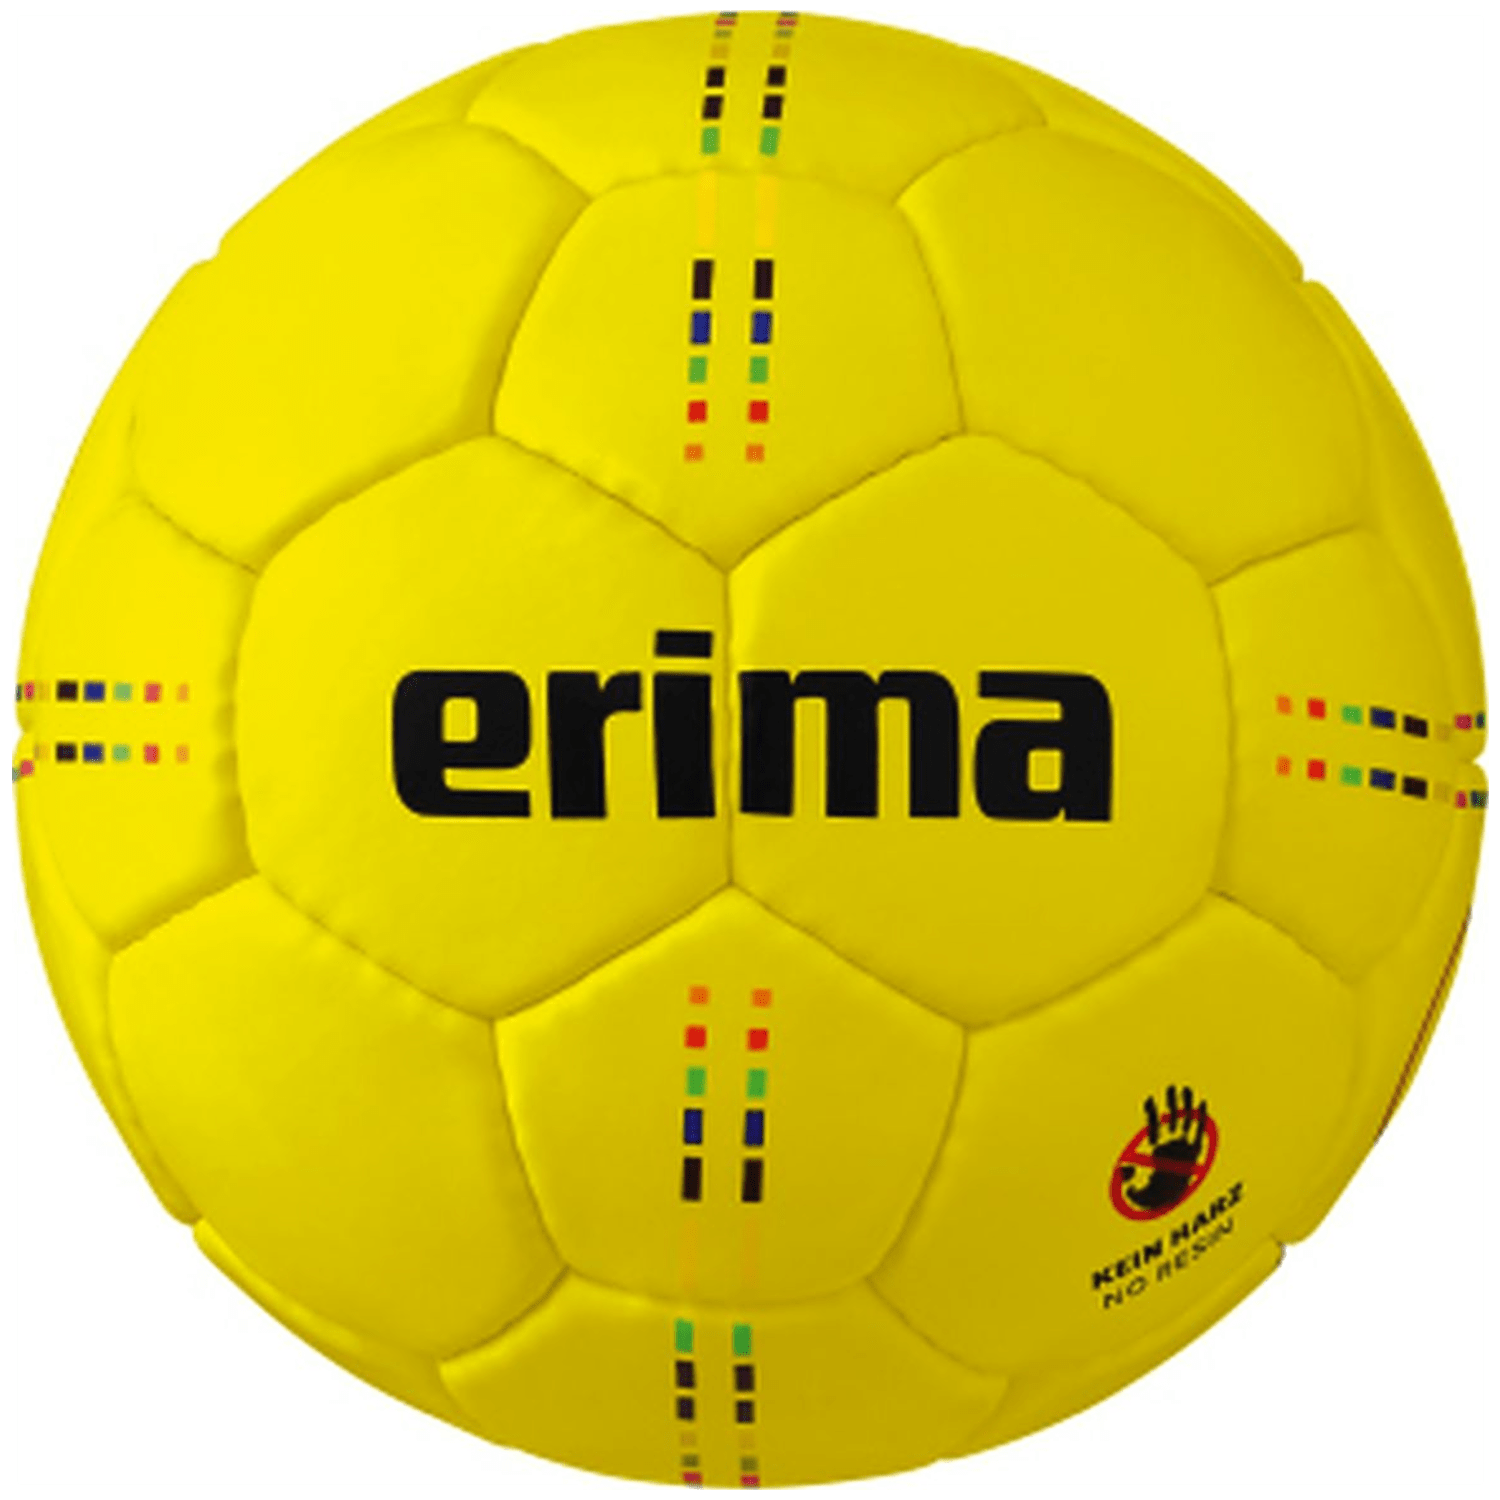 Erima Pure Grip No. 5 - Waxfree Handball